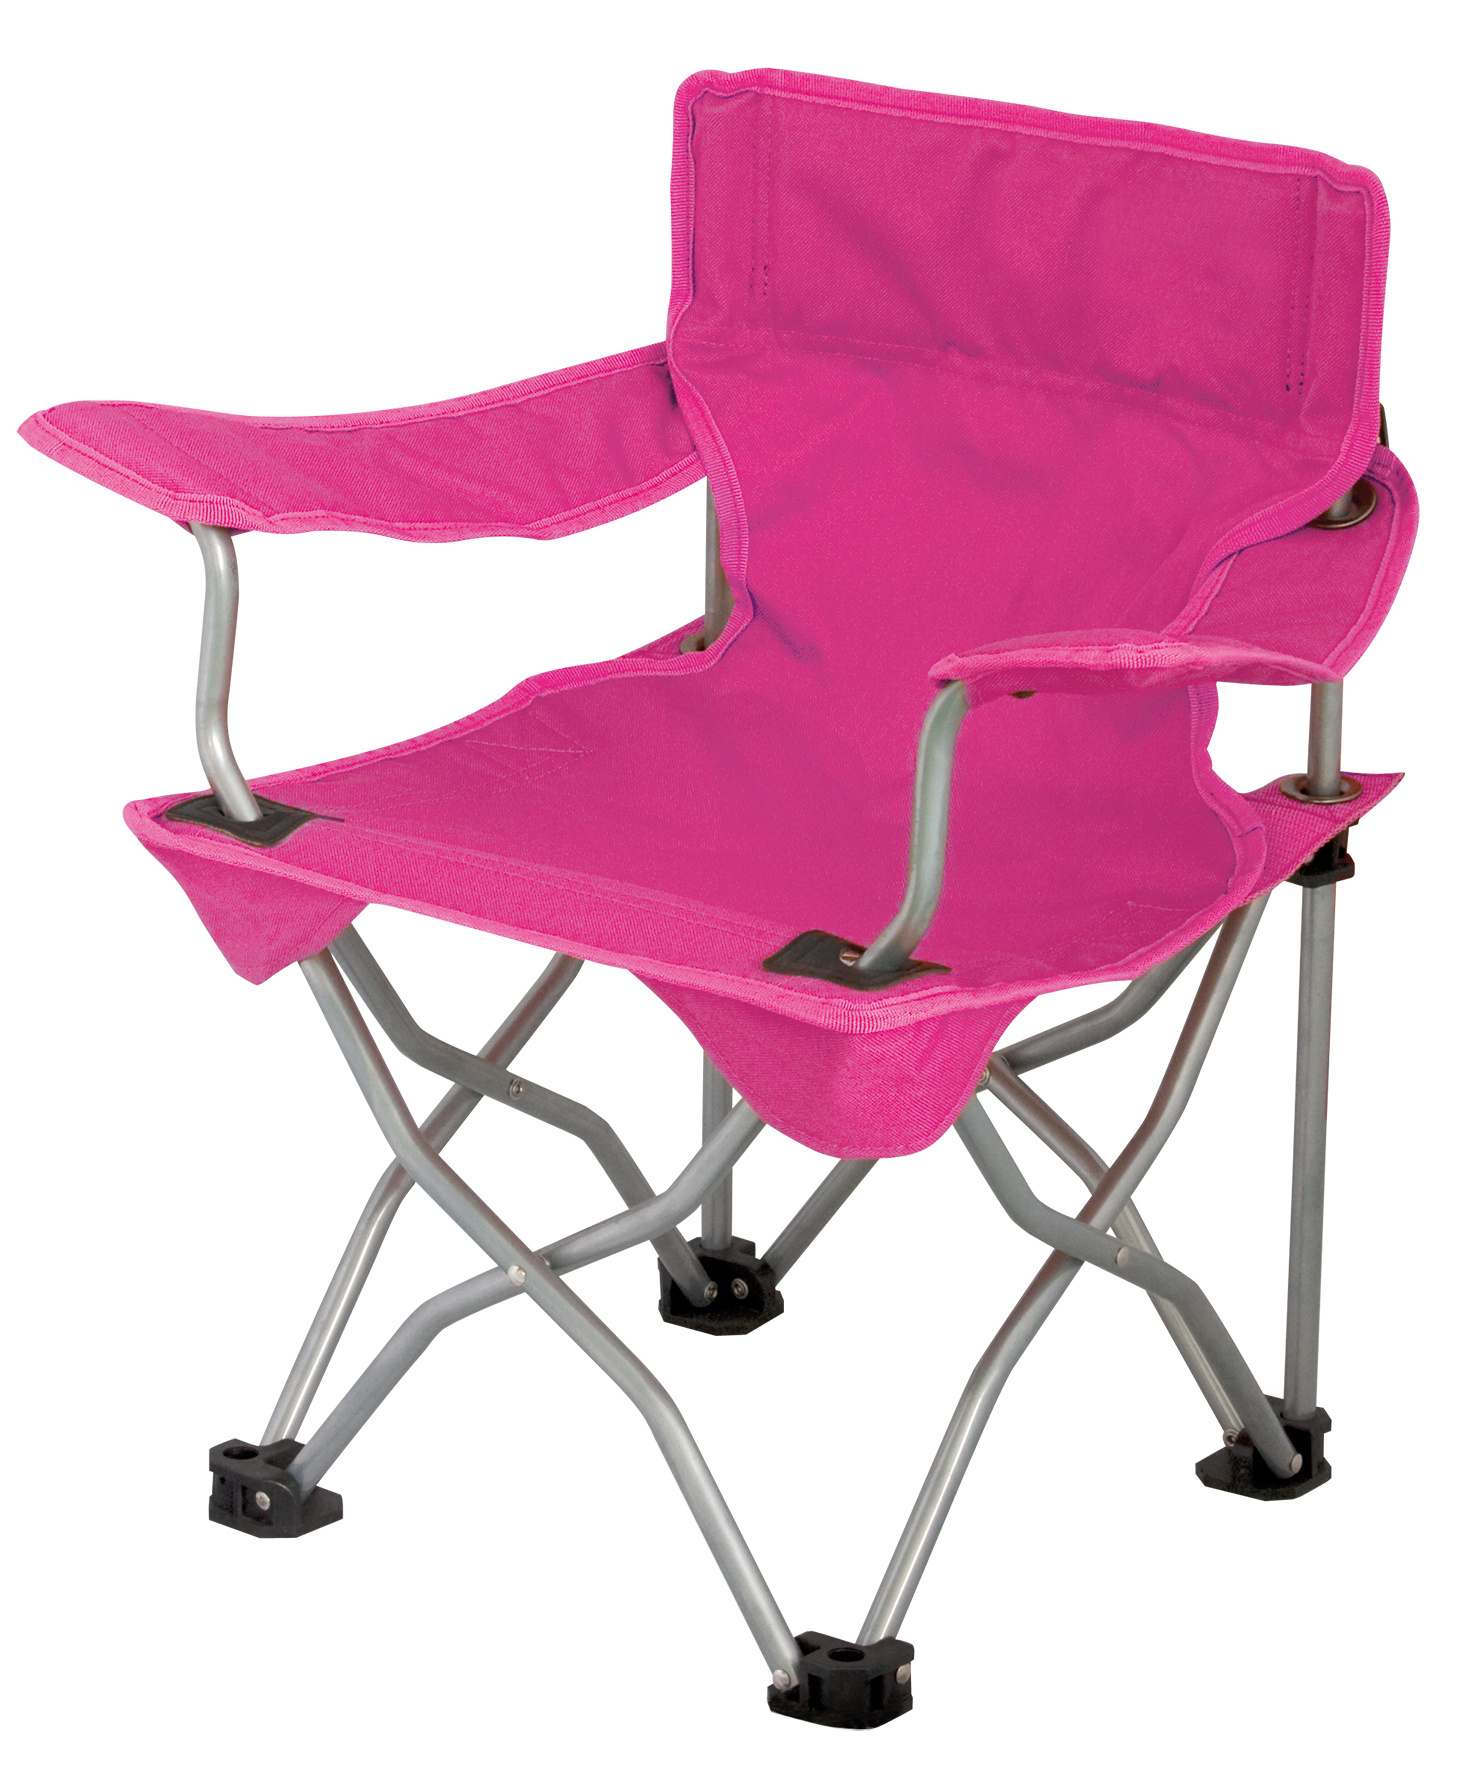 Eurotrail campingstuhl Ardeche 54 x 35 cm Polyester rosa